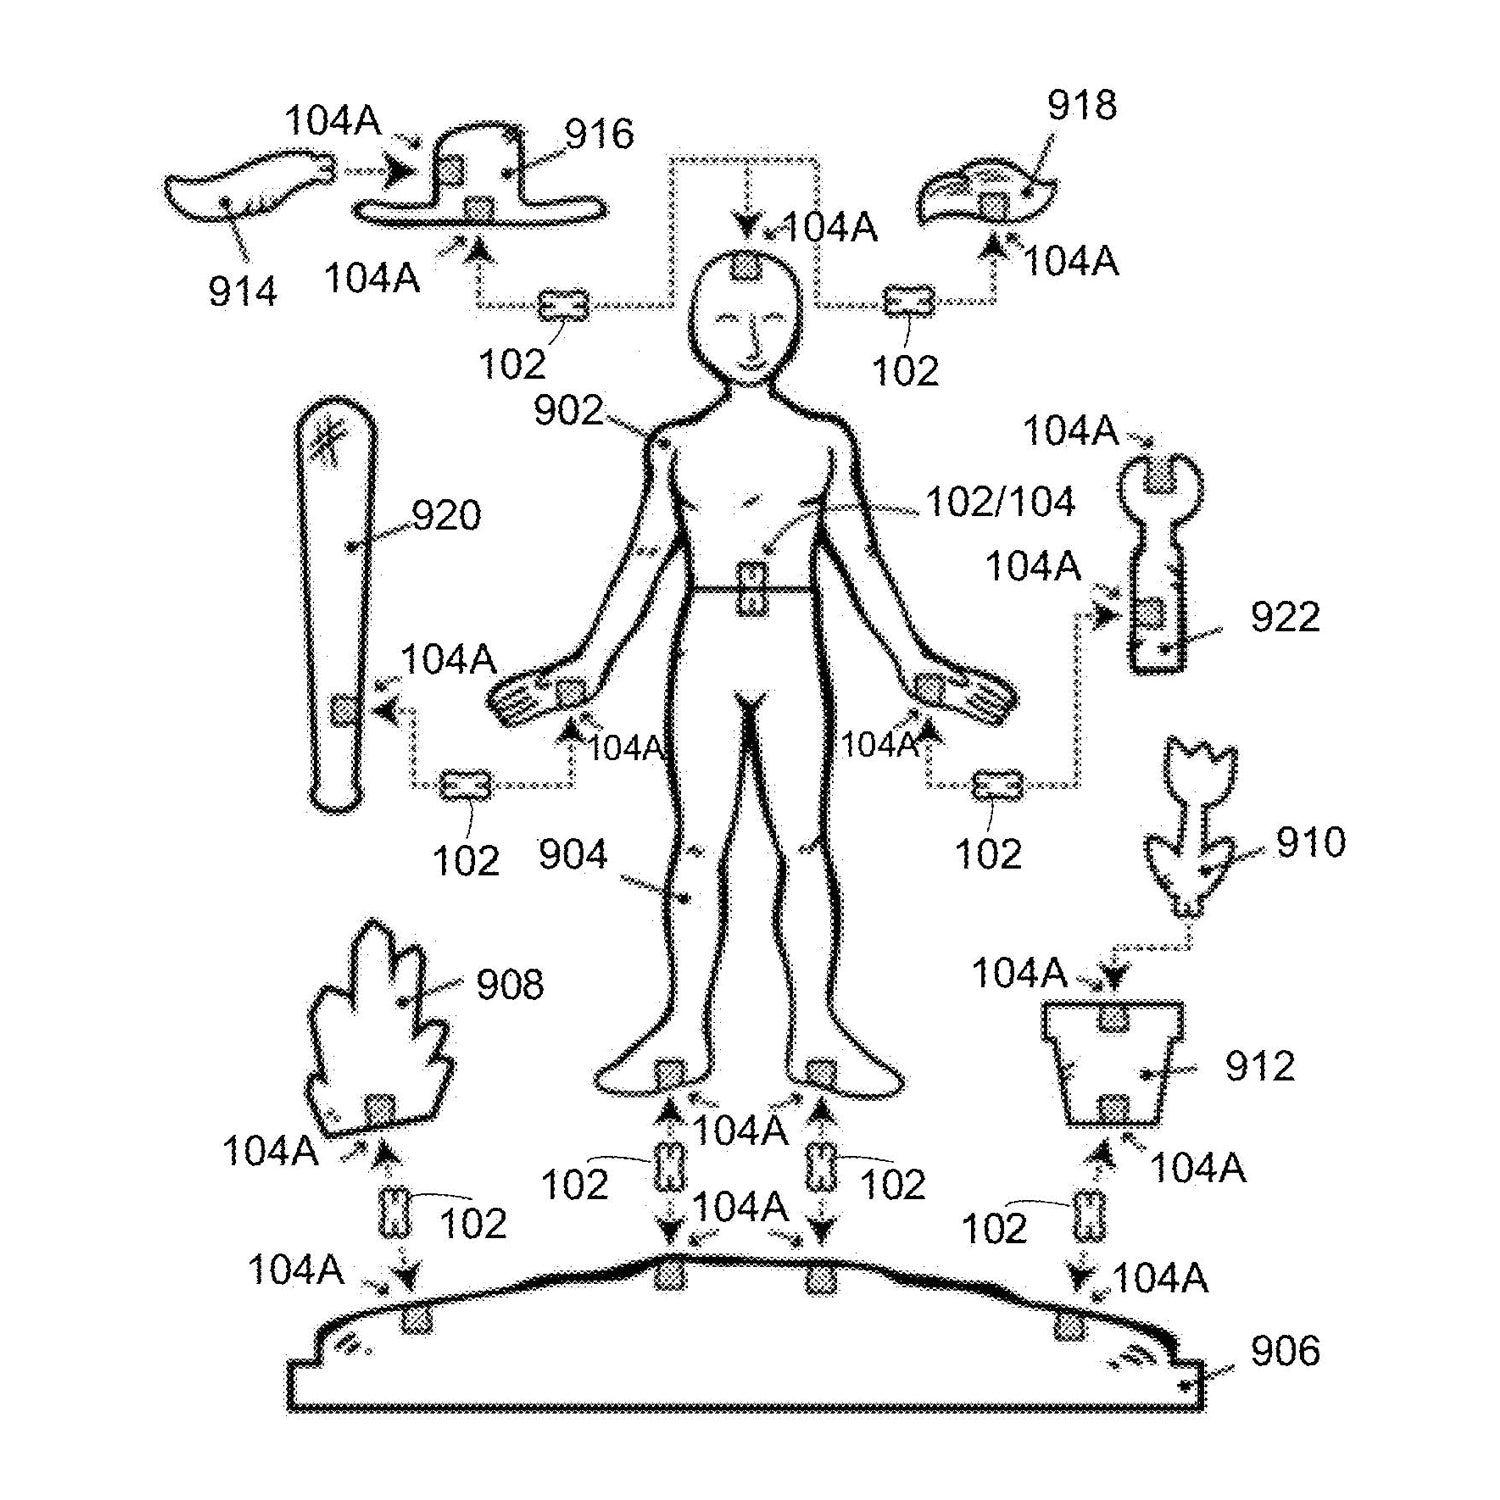 3D Printing Patent Illustration